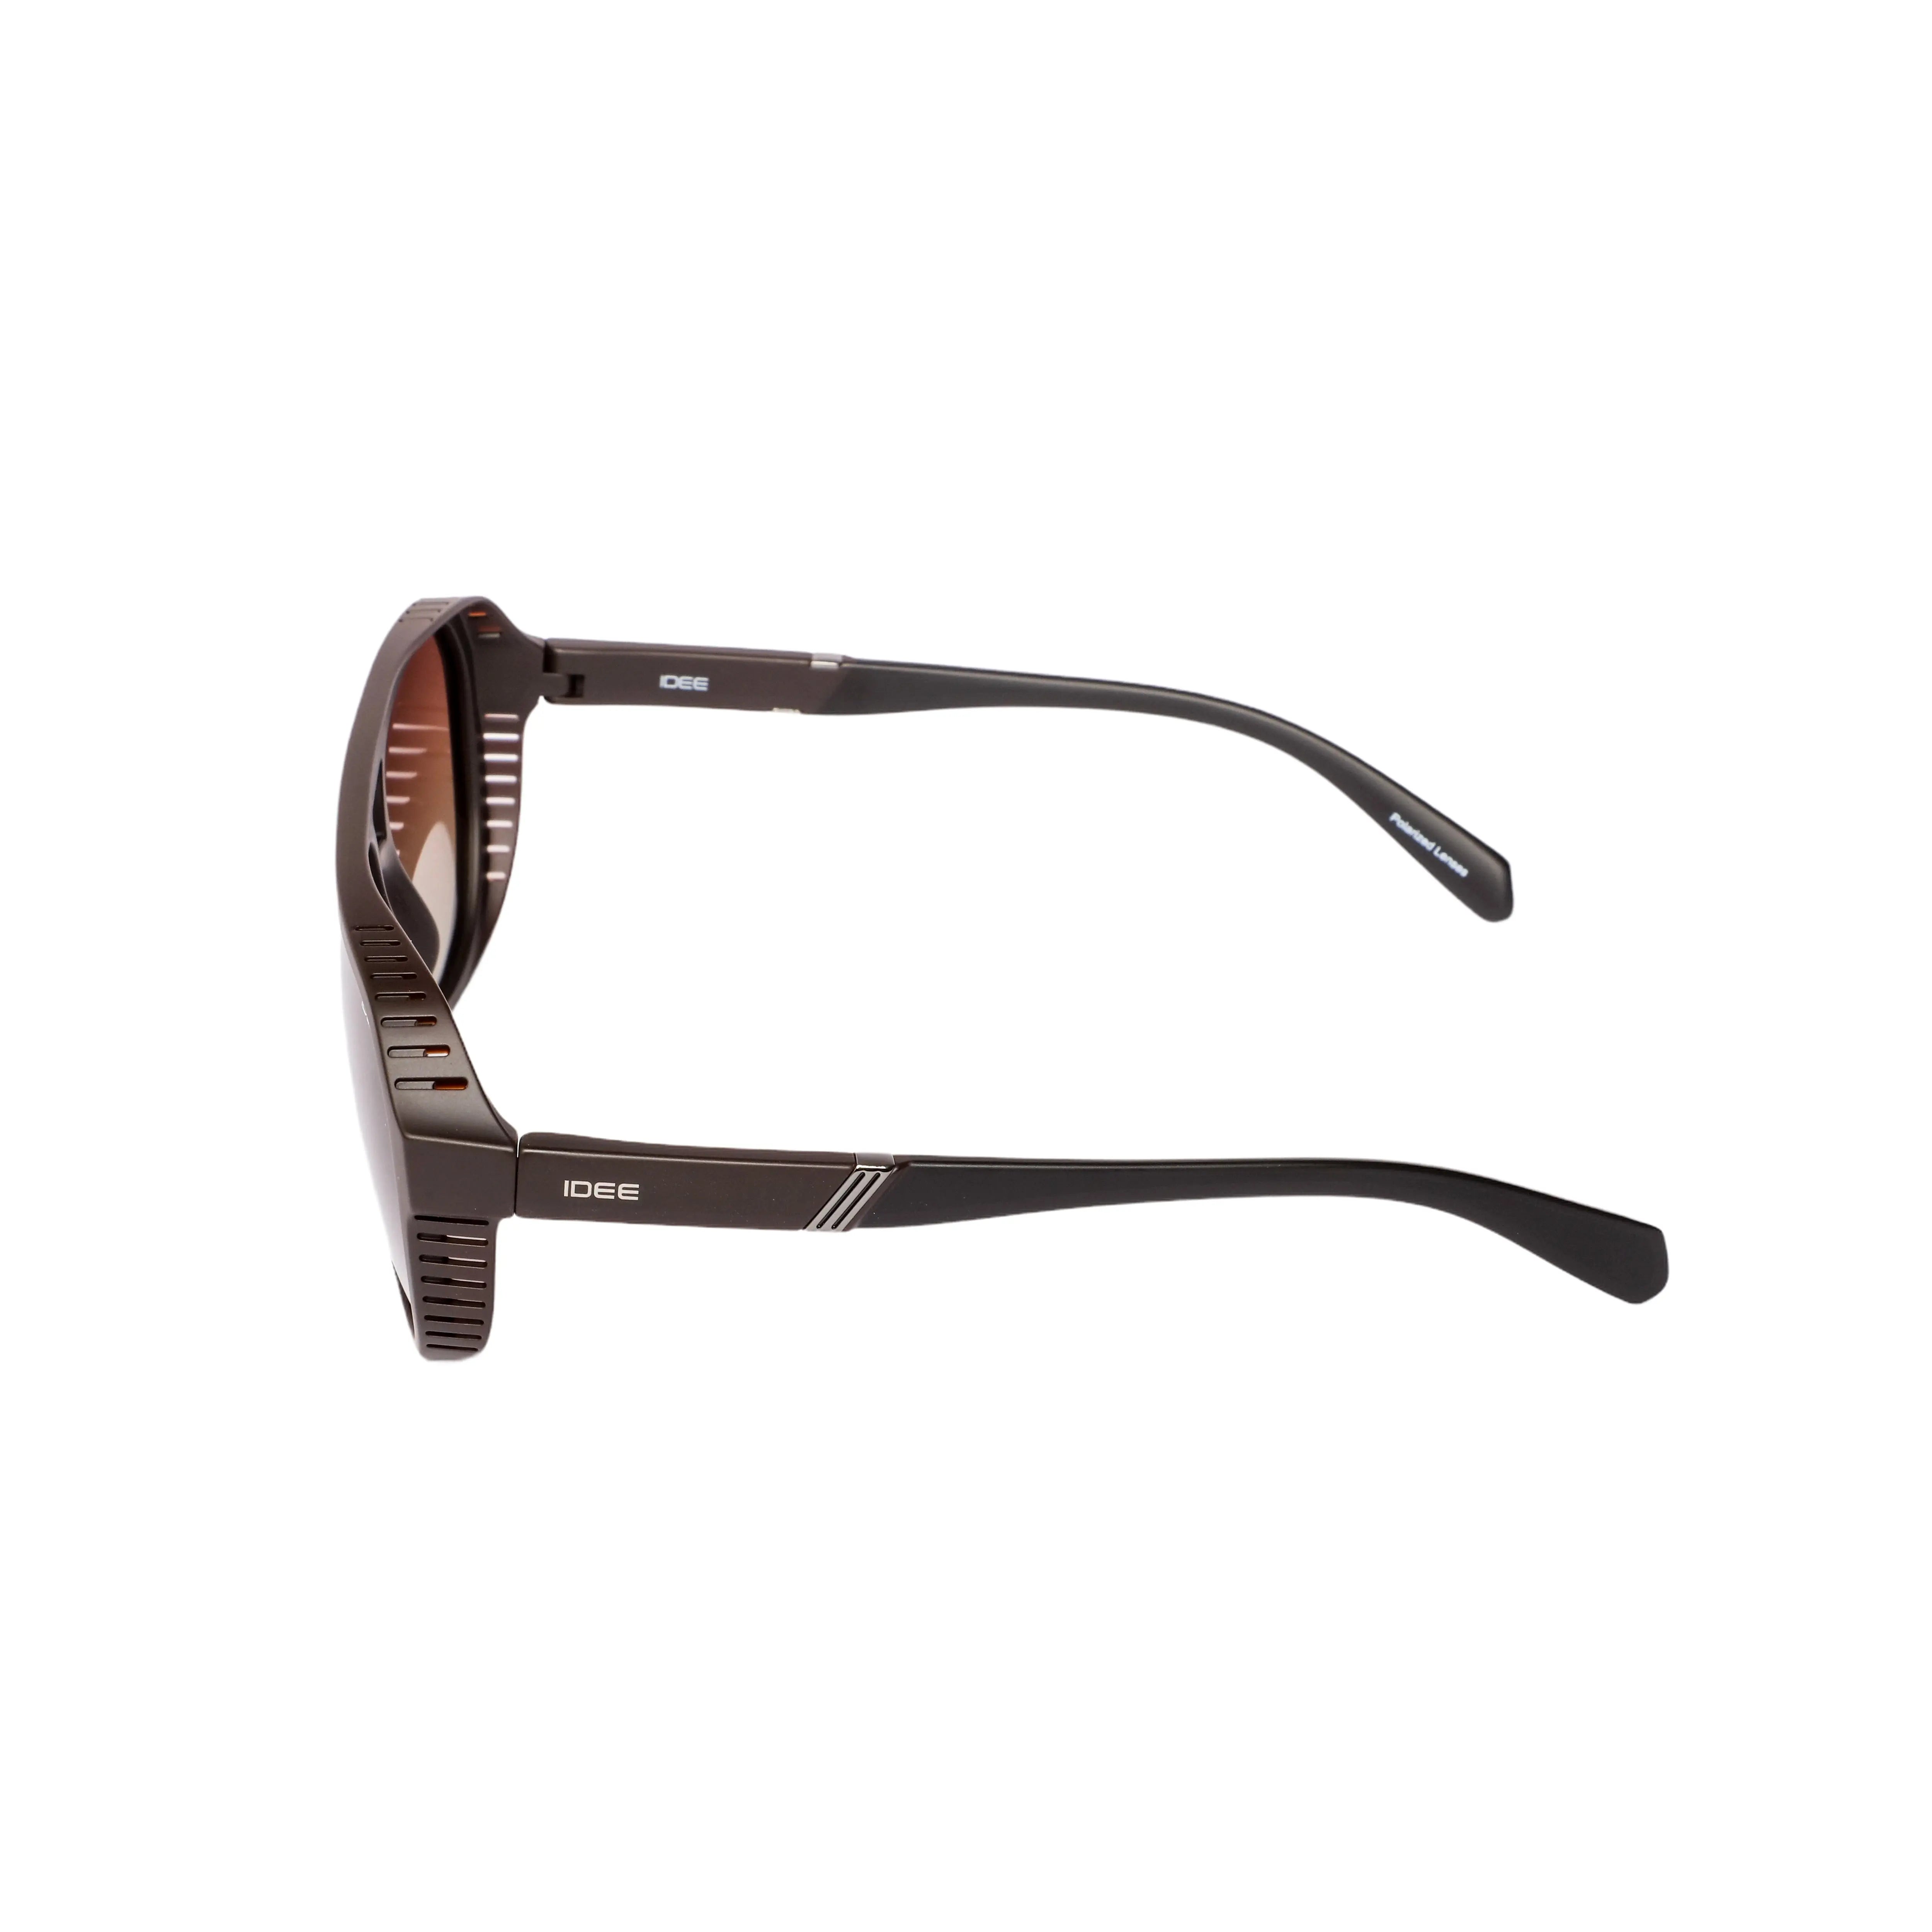 IDEE-S2991--C2 Sunglasses - Premium Sunglasses from IDEE - Just Rs. 3380! Shop now at Laxmi Opticians